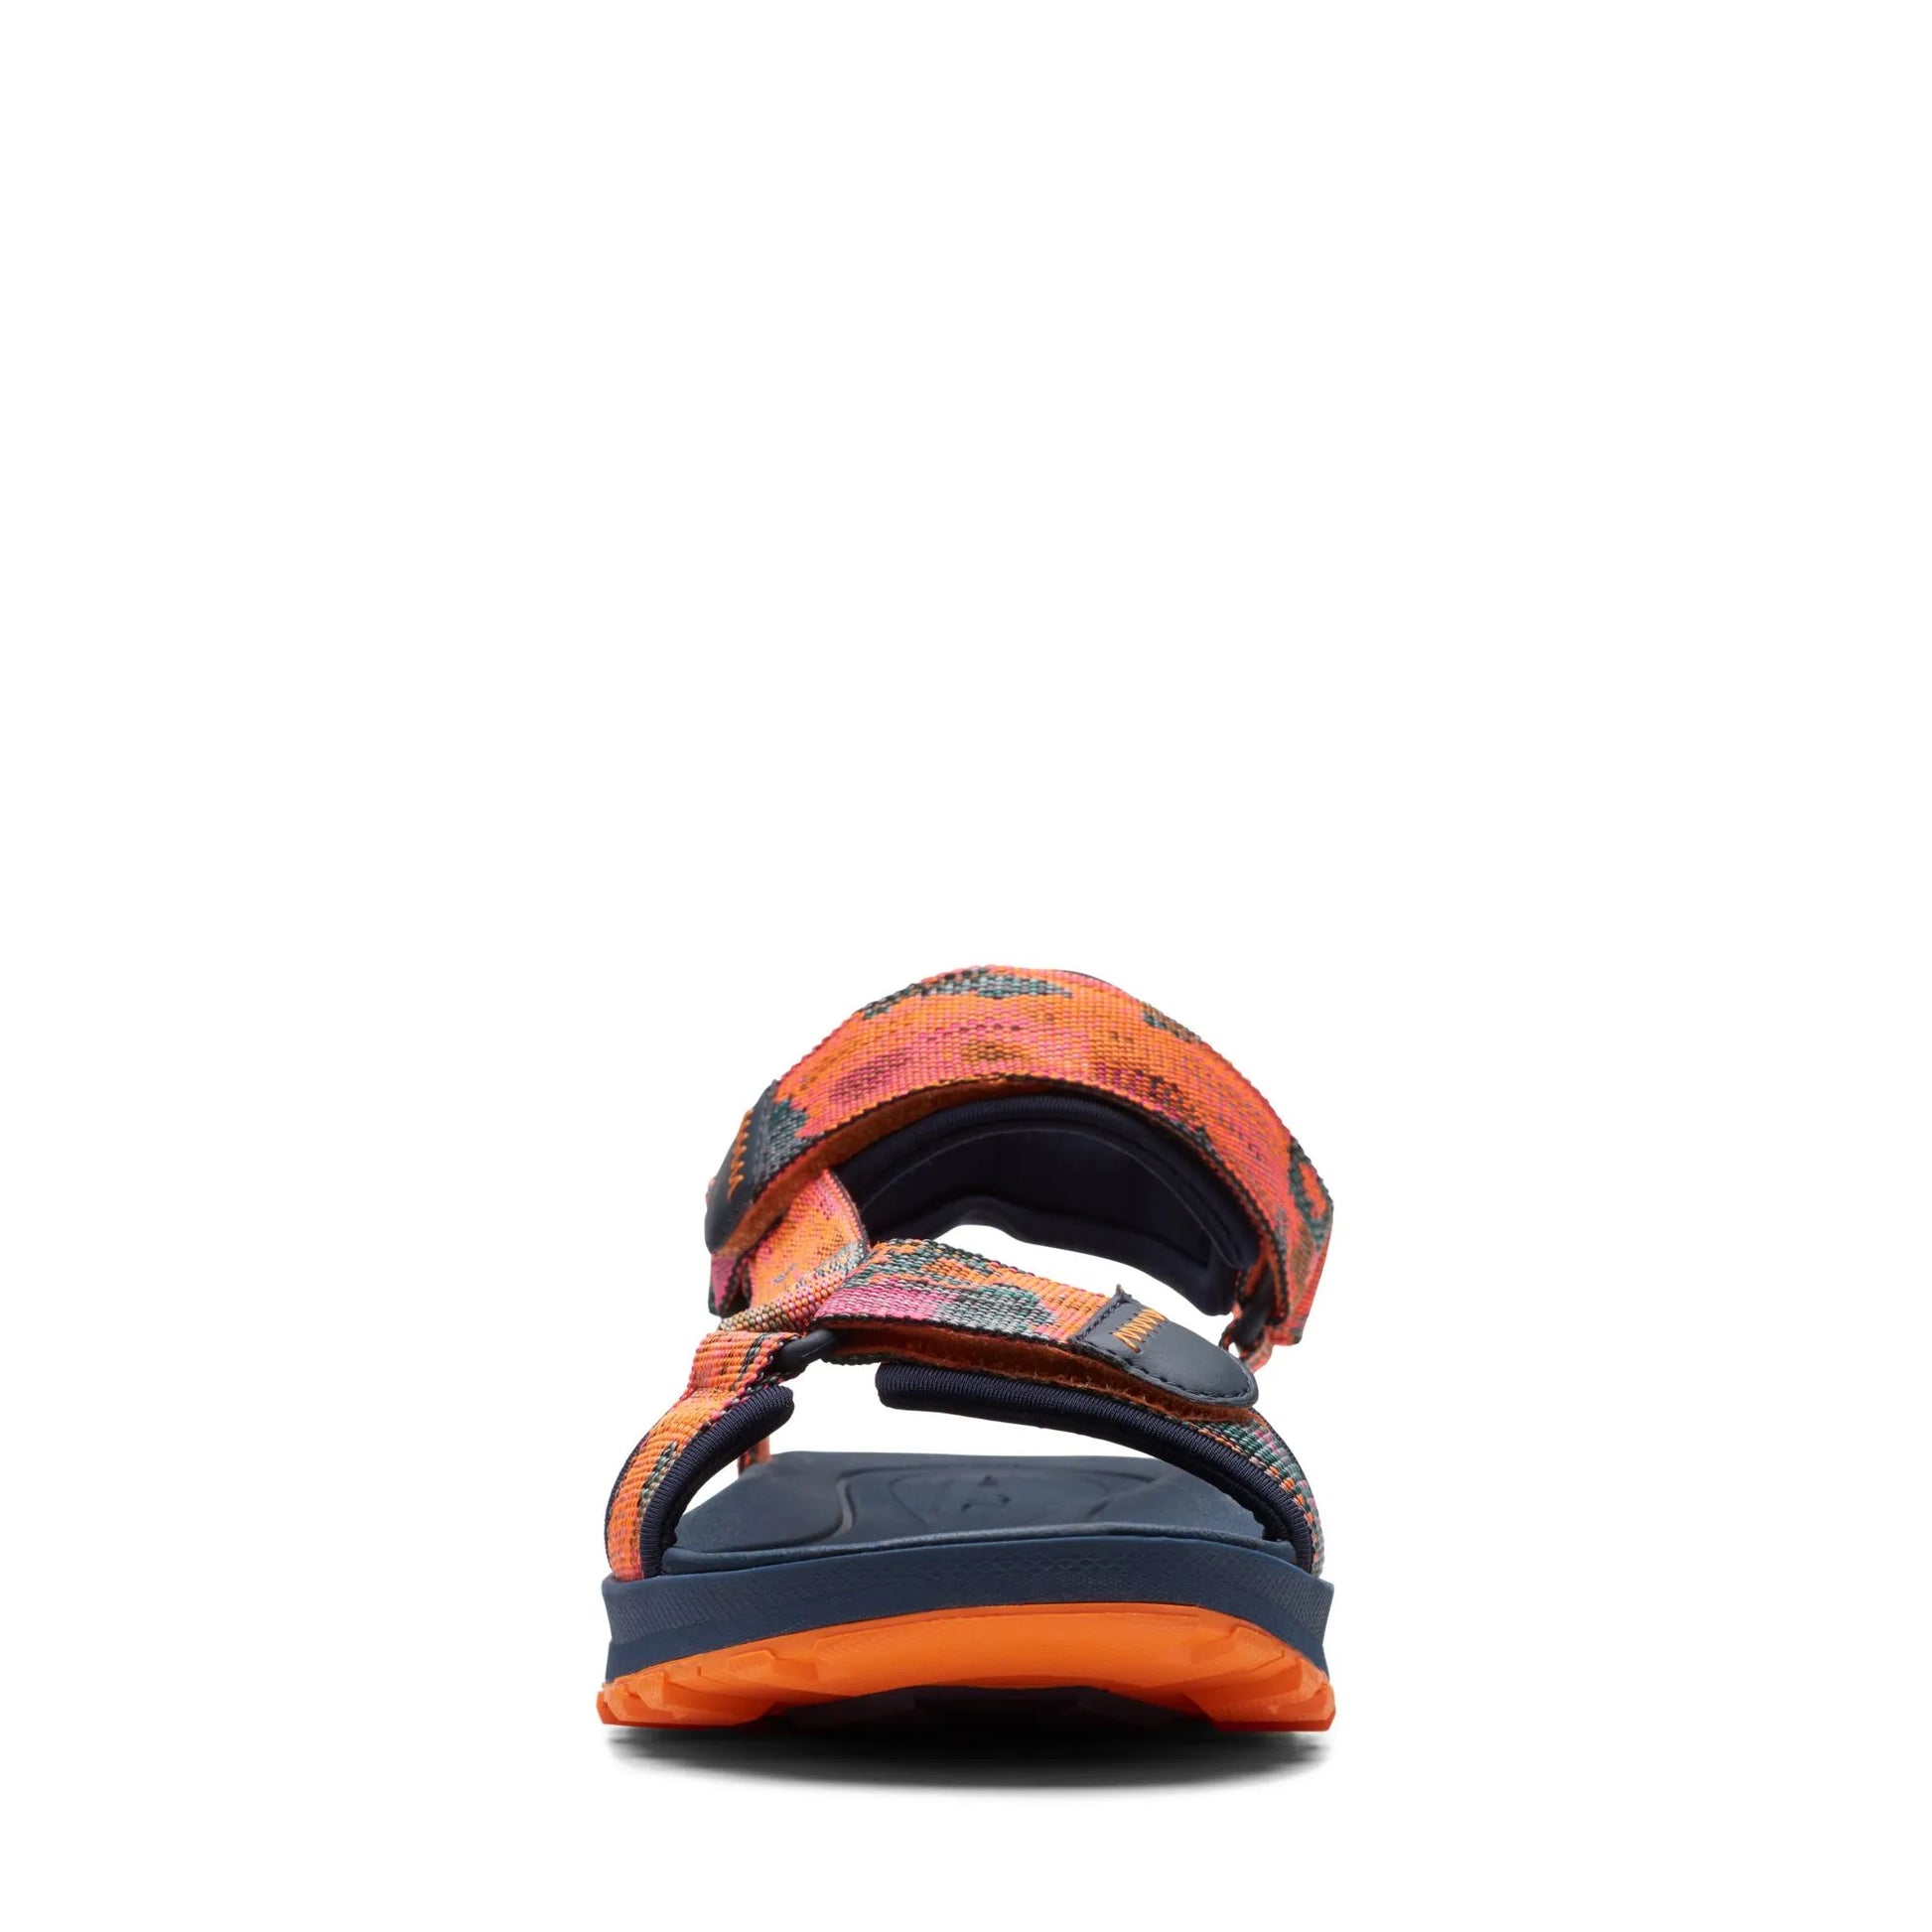 Sandalias De La Marca Clarks Para Hombre Modelo Atl Trek Sea Orange Combi En Color Naranja